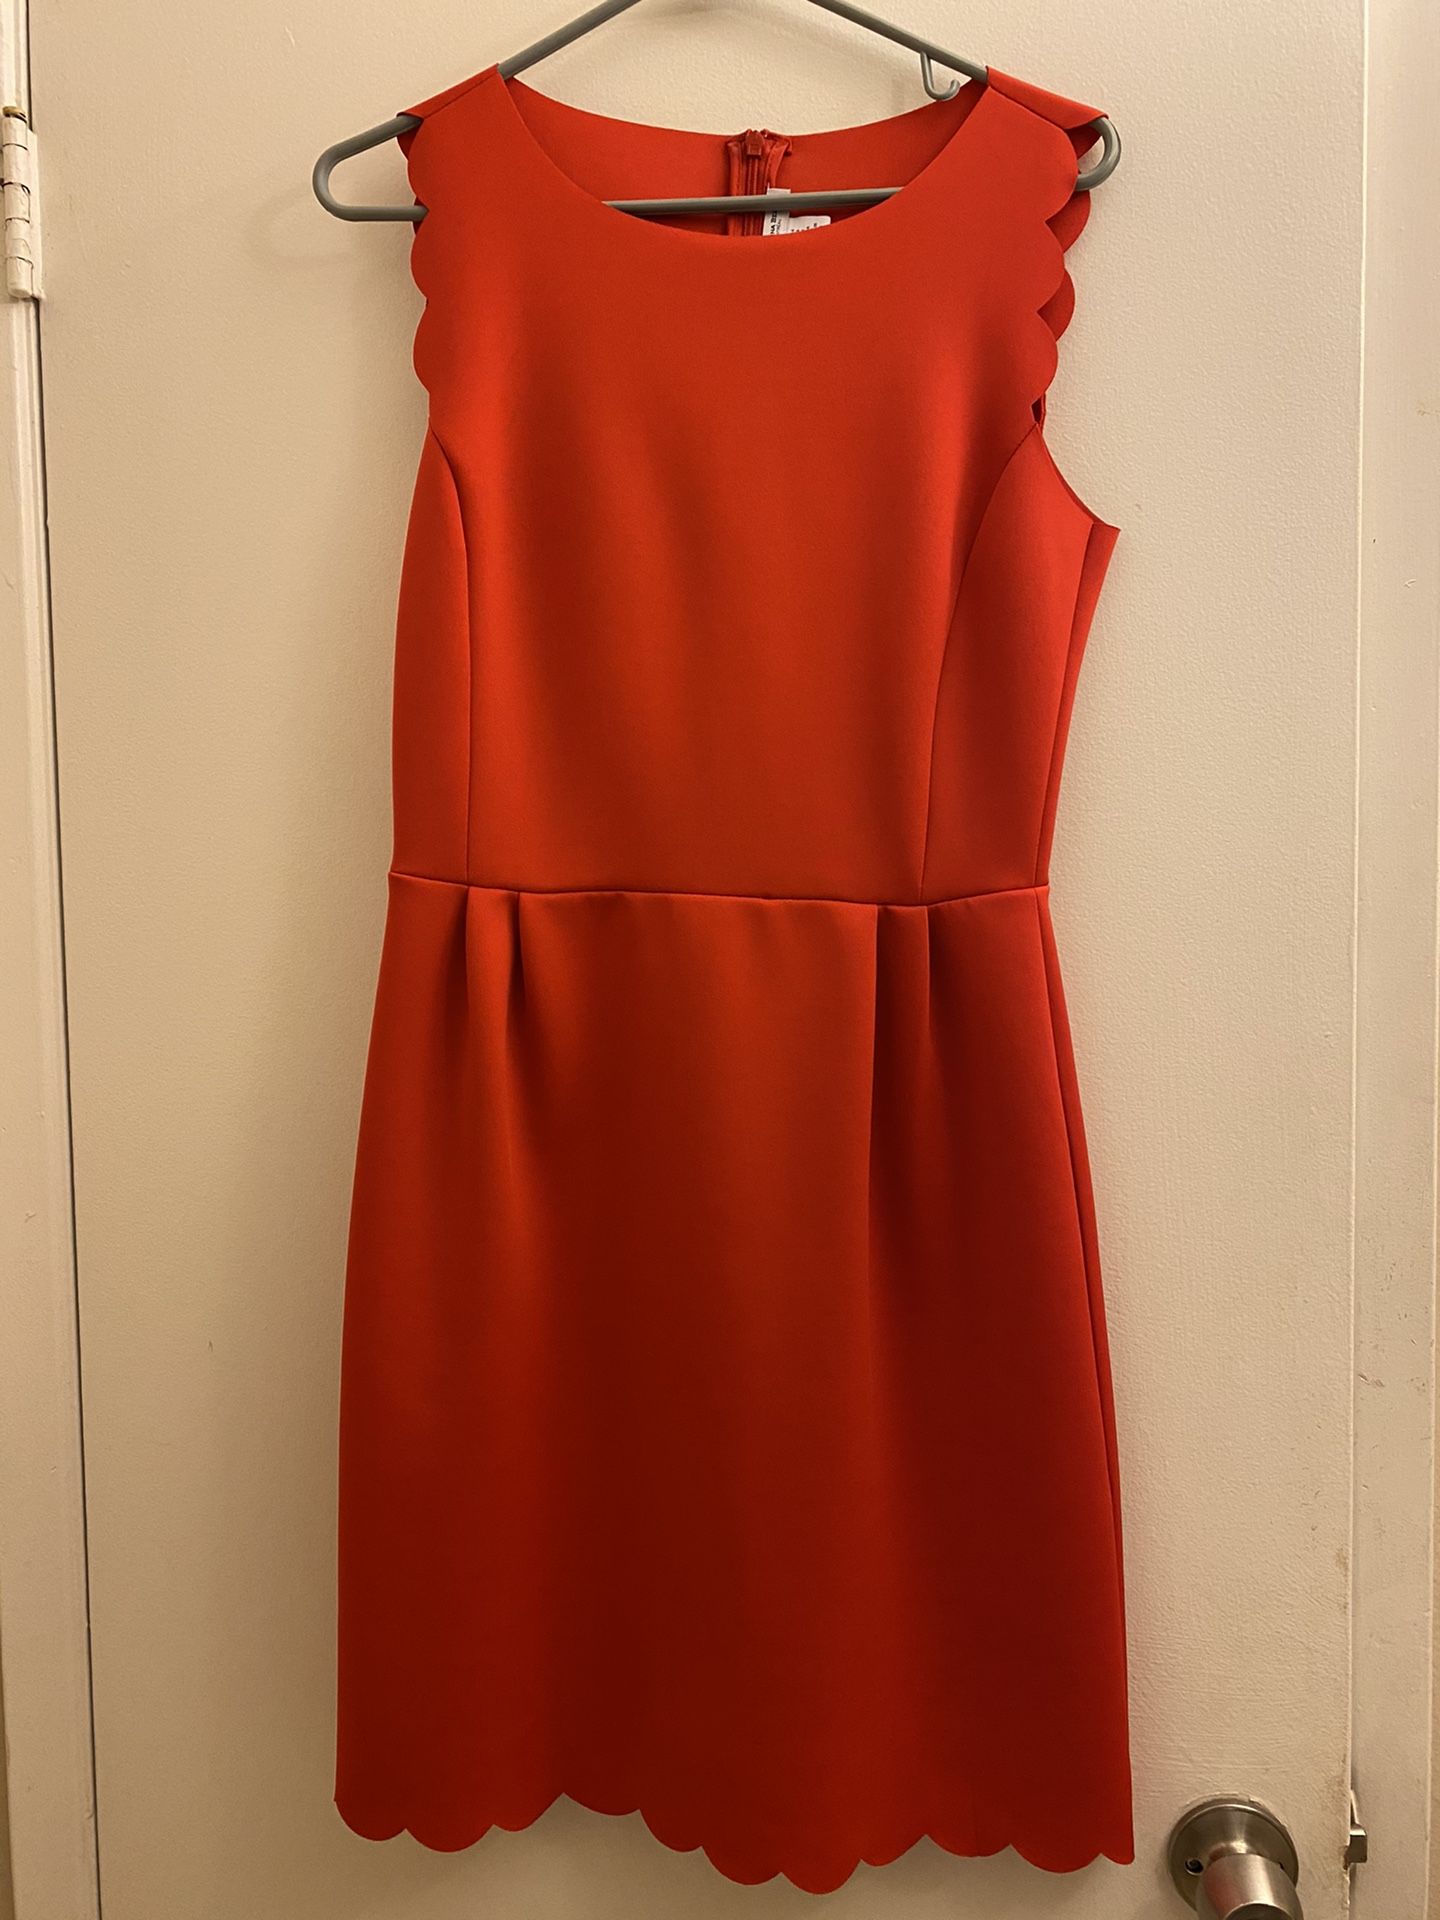 Women’s Red Dress, Size 4